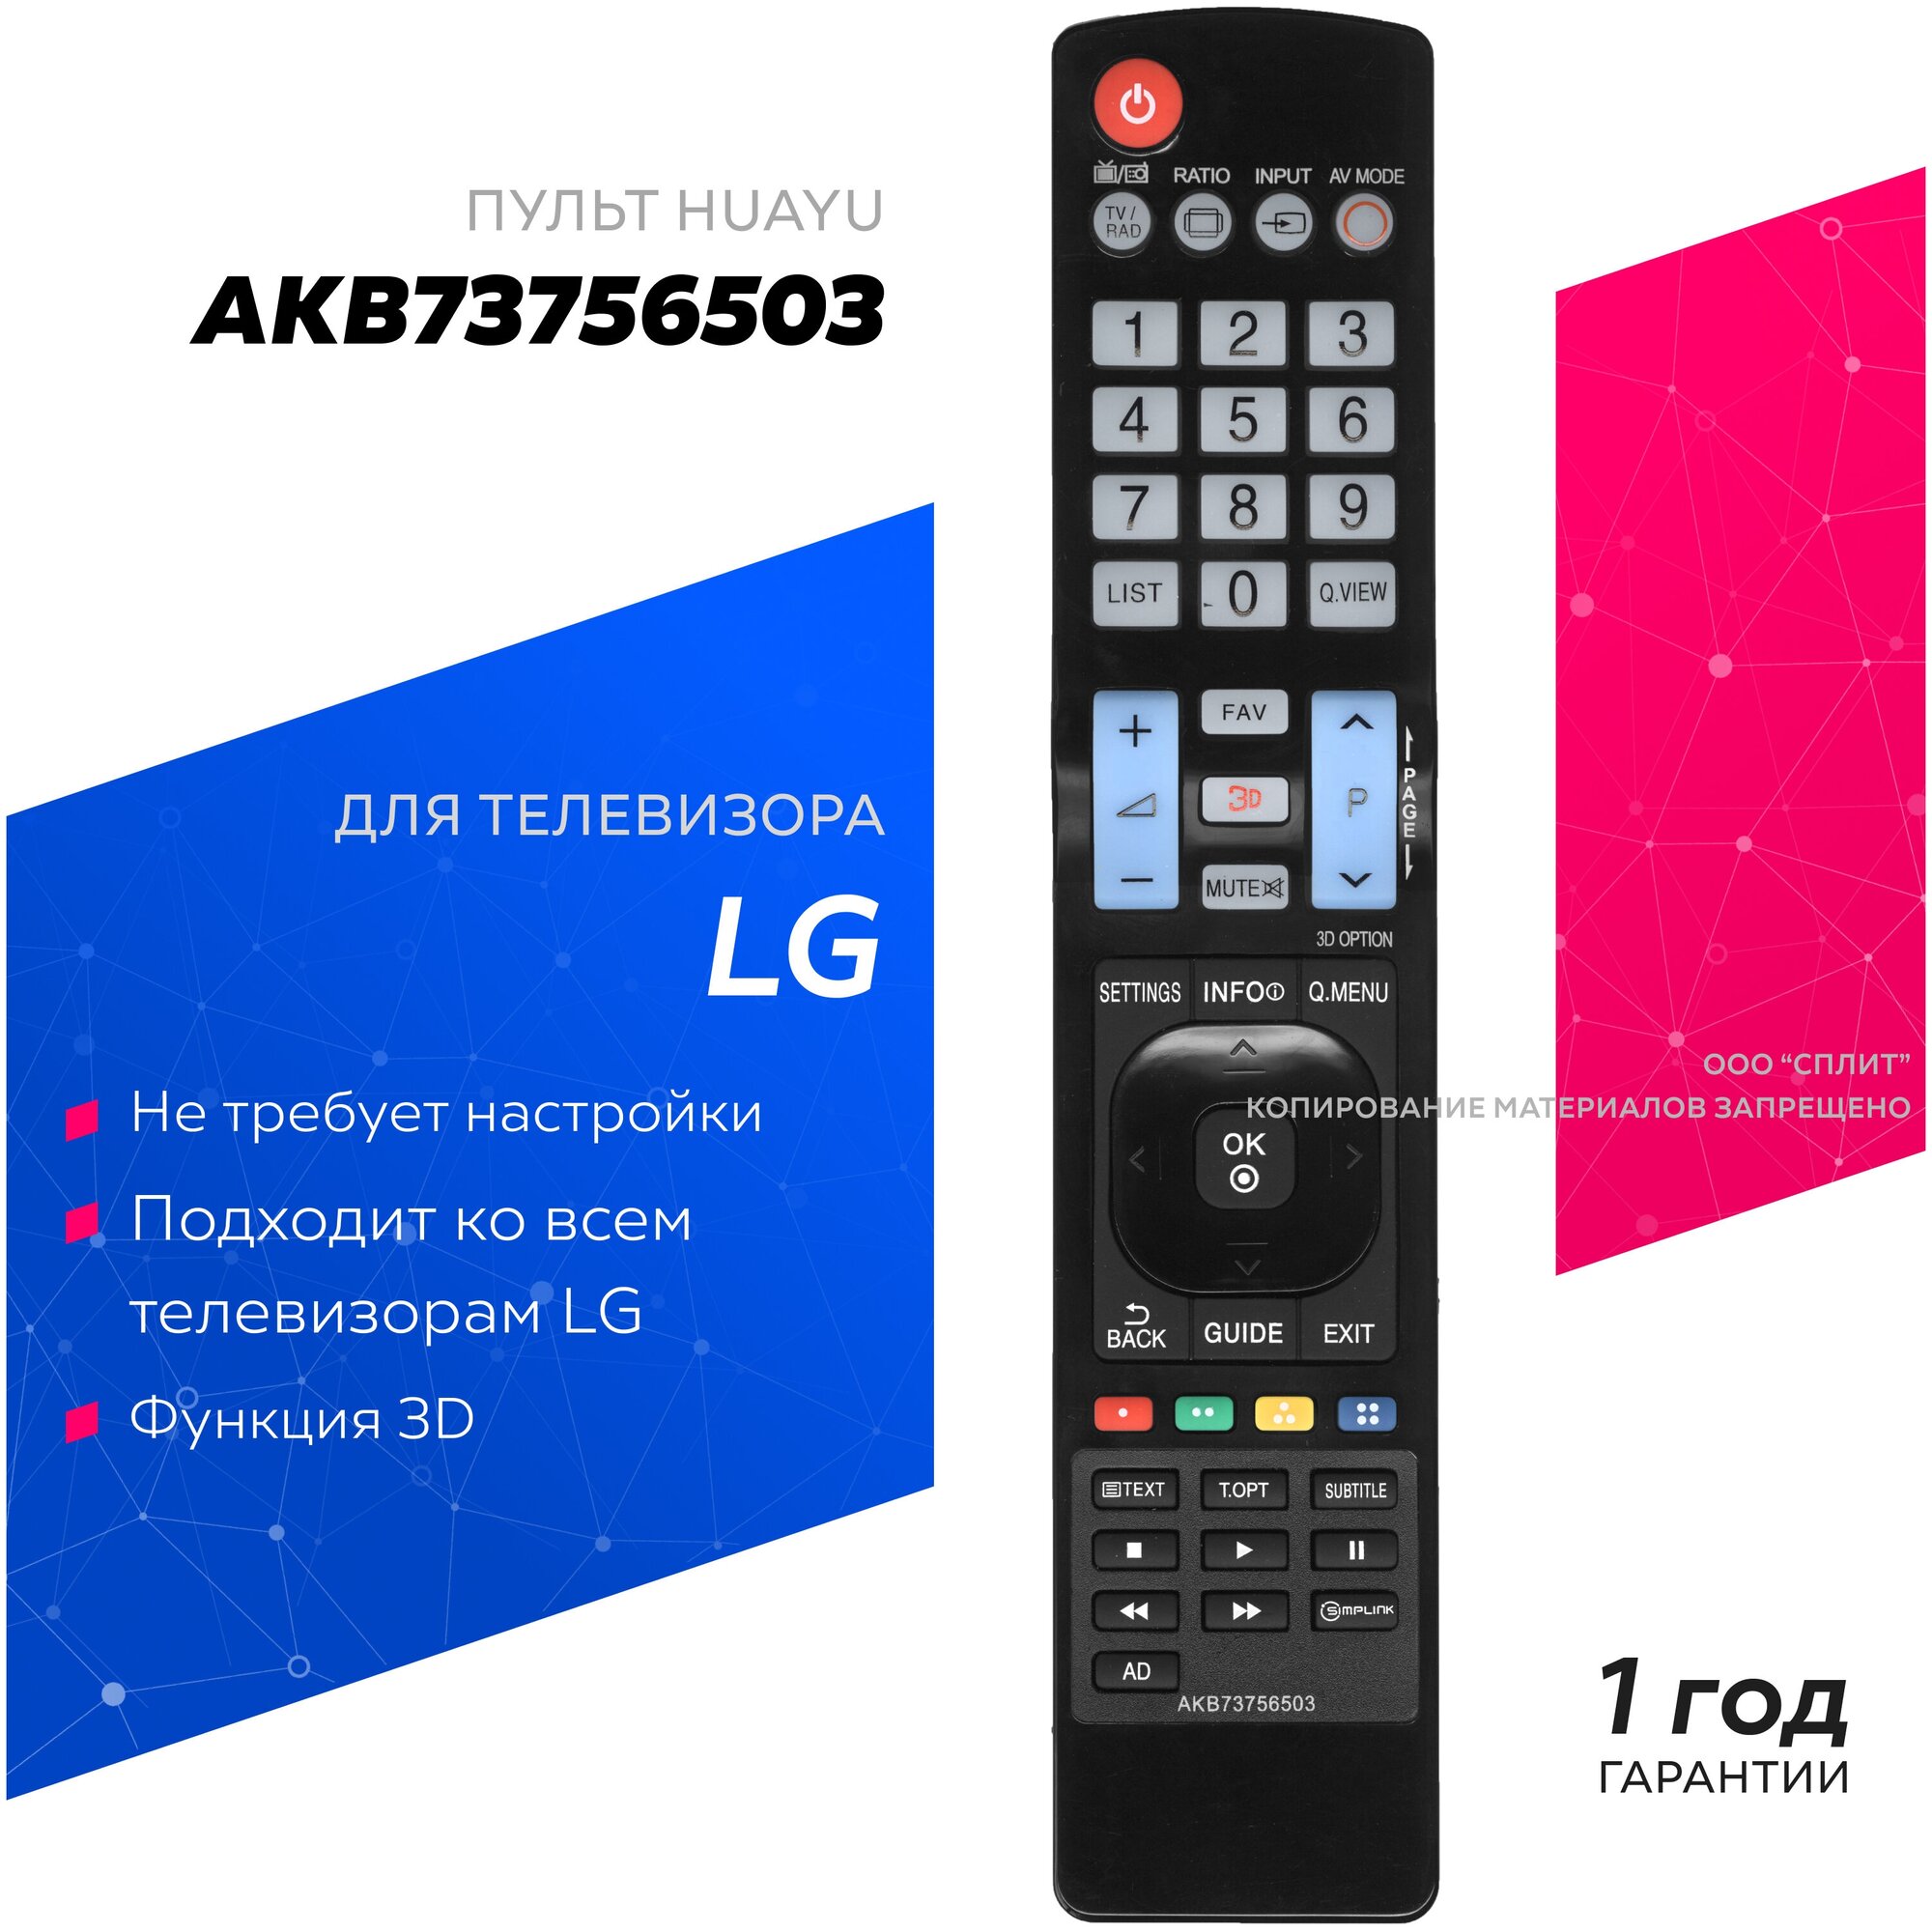 Пульт дистанционного управления LG AKB73756503 ic LCD 3d TV (HLG370) - фото №11